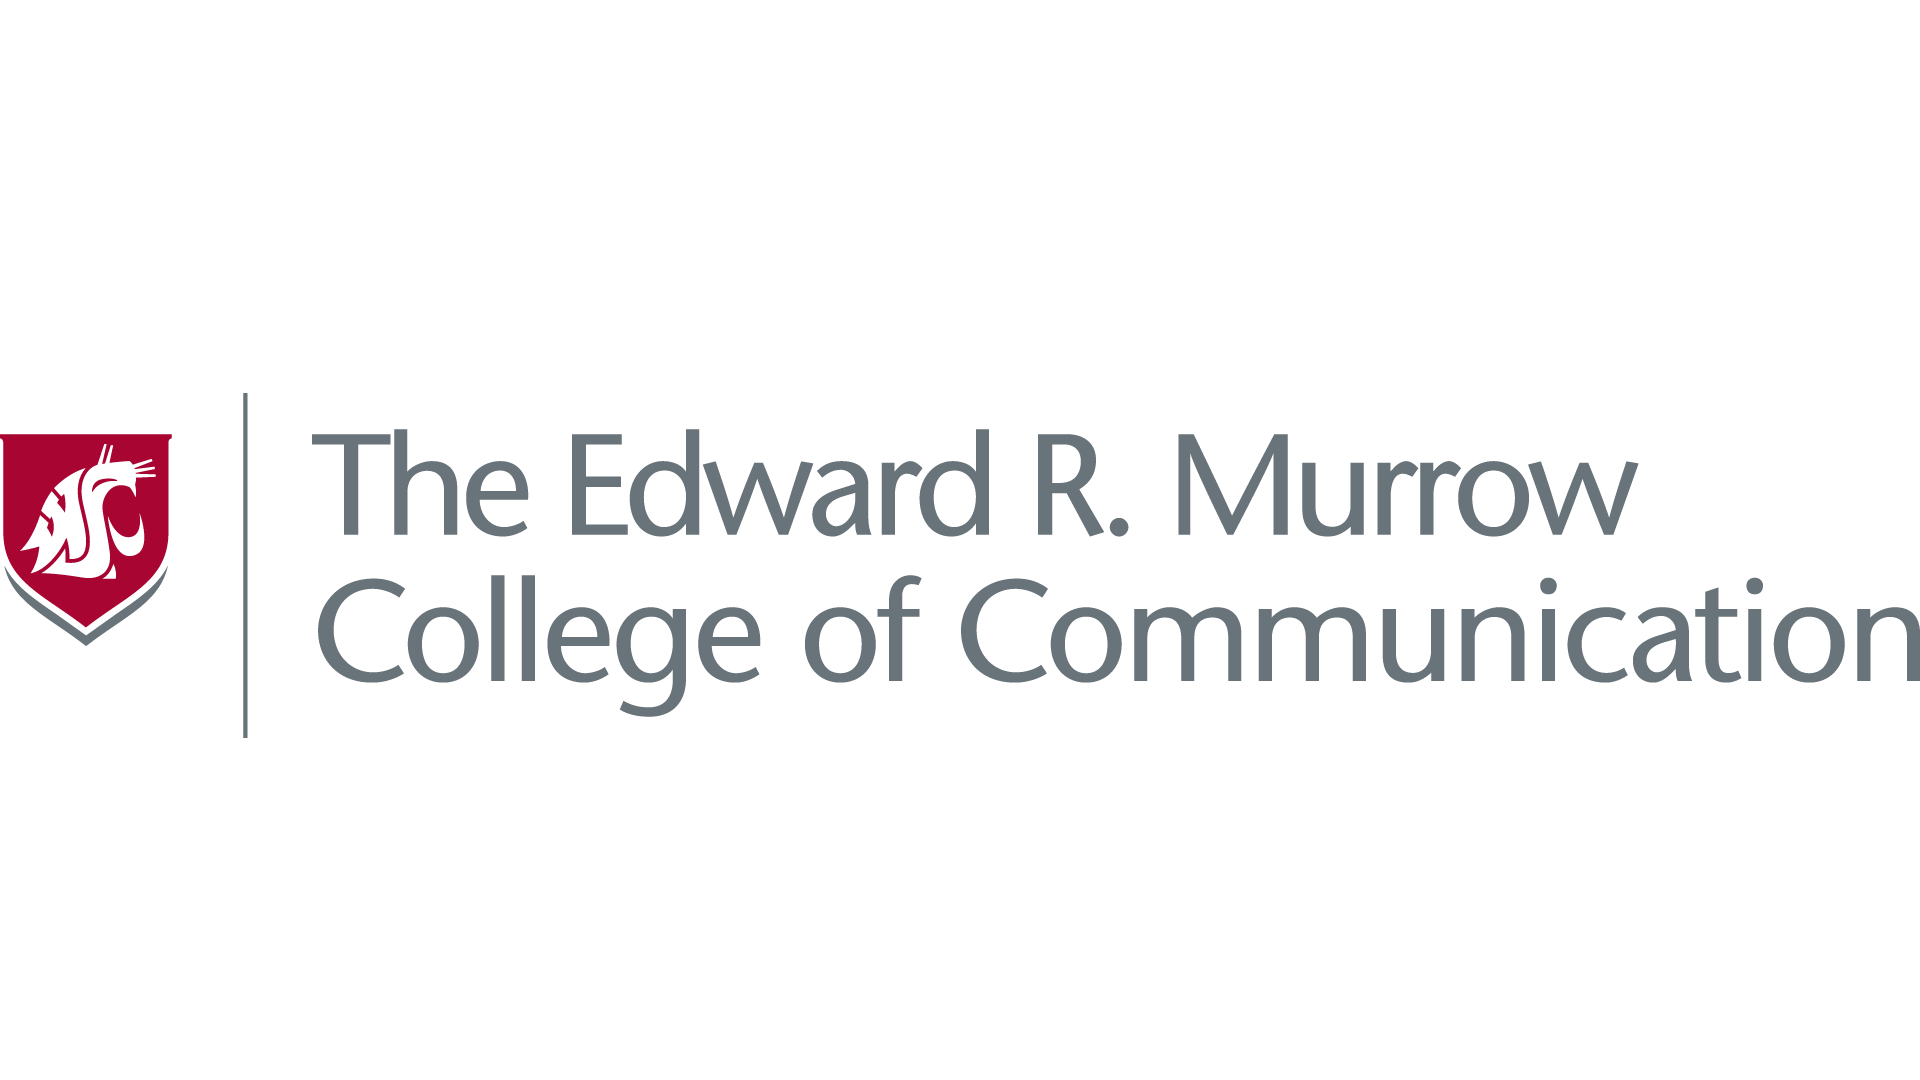 College of Communication WSU logo